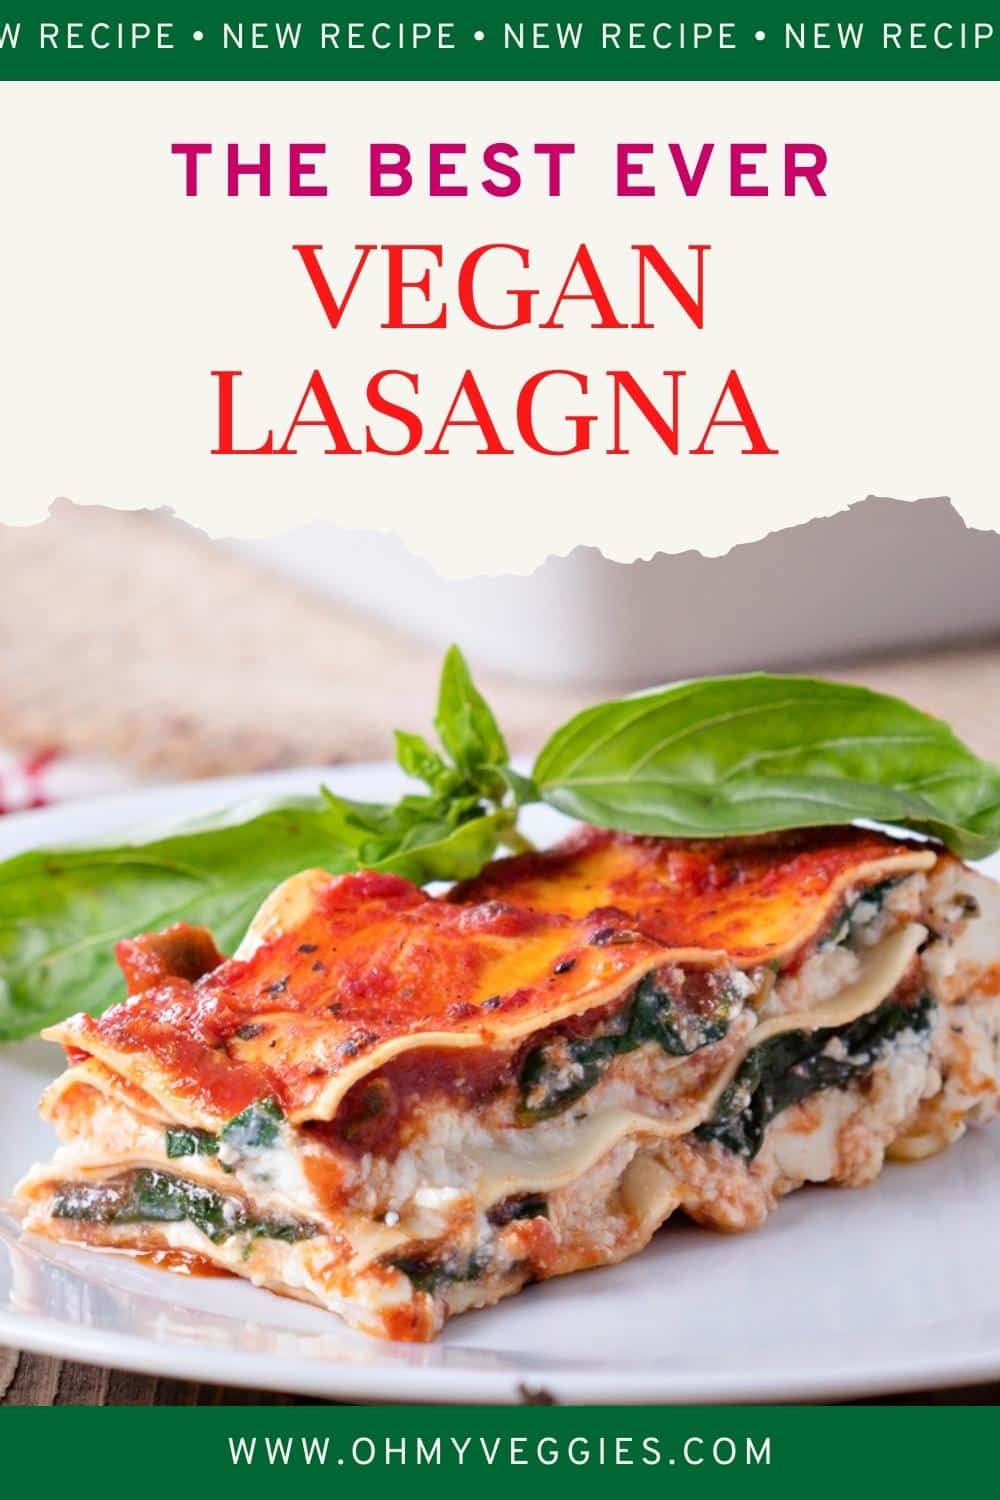 The BEST Vegan Lasagna - Oh My Veggies!